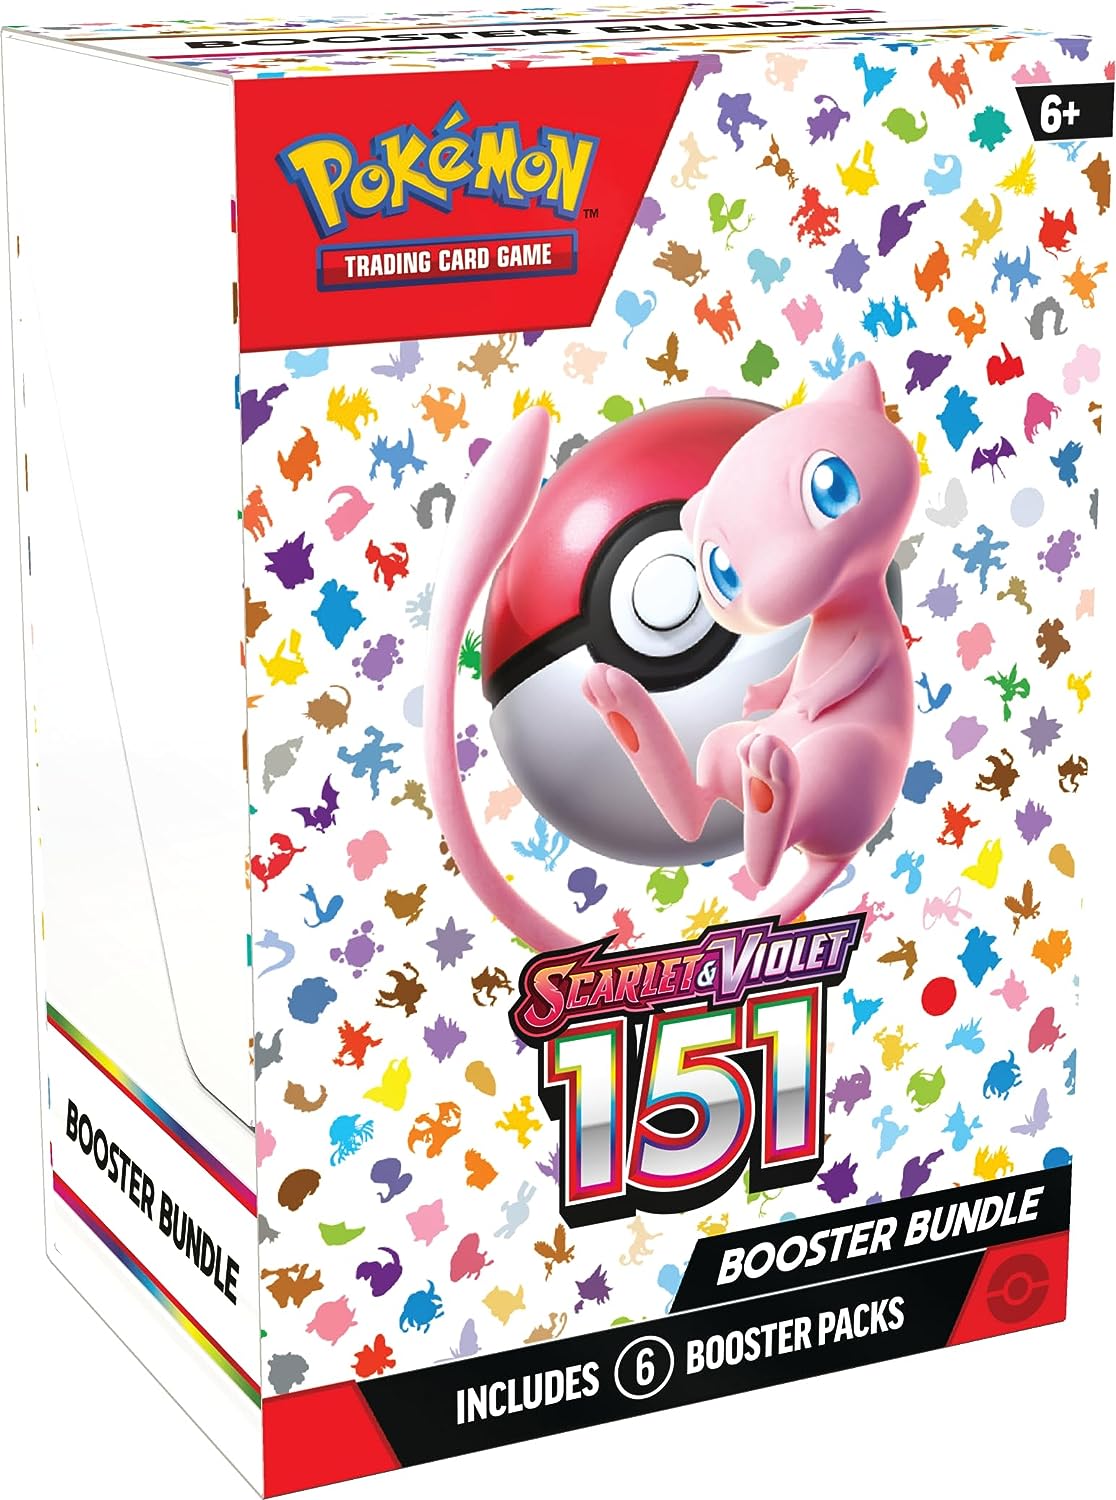 Pokémon TCG: Scarlet & Violet – 151 – Booster Bundle